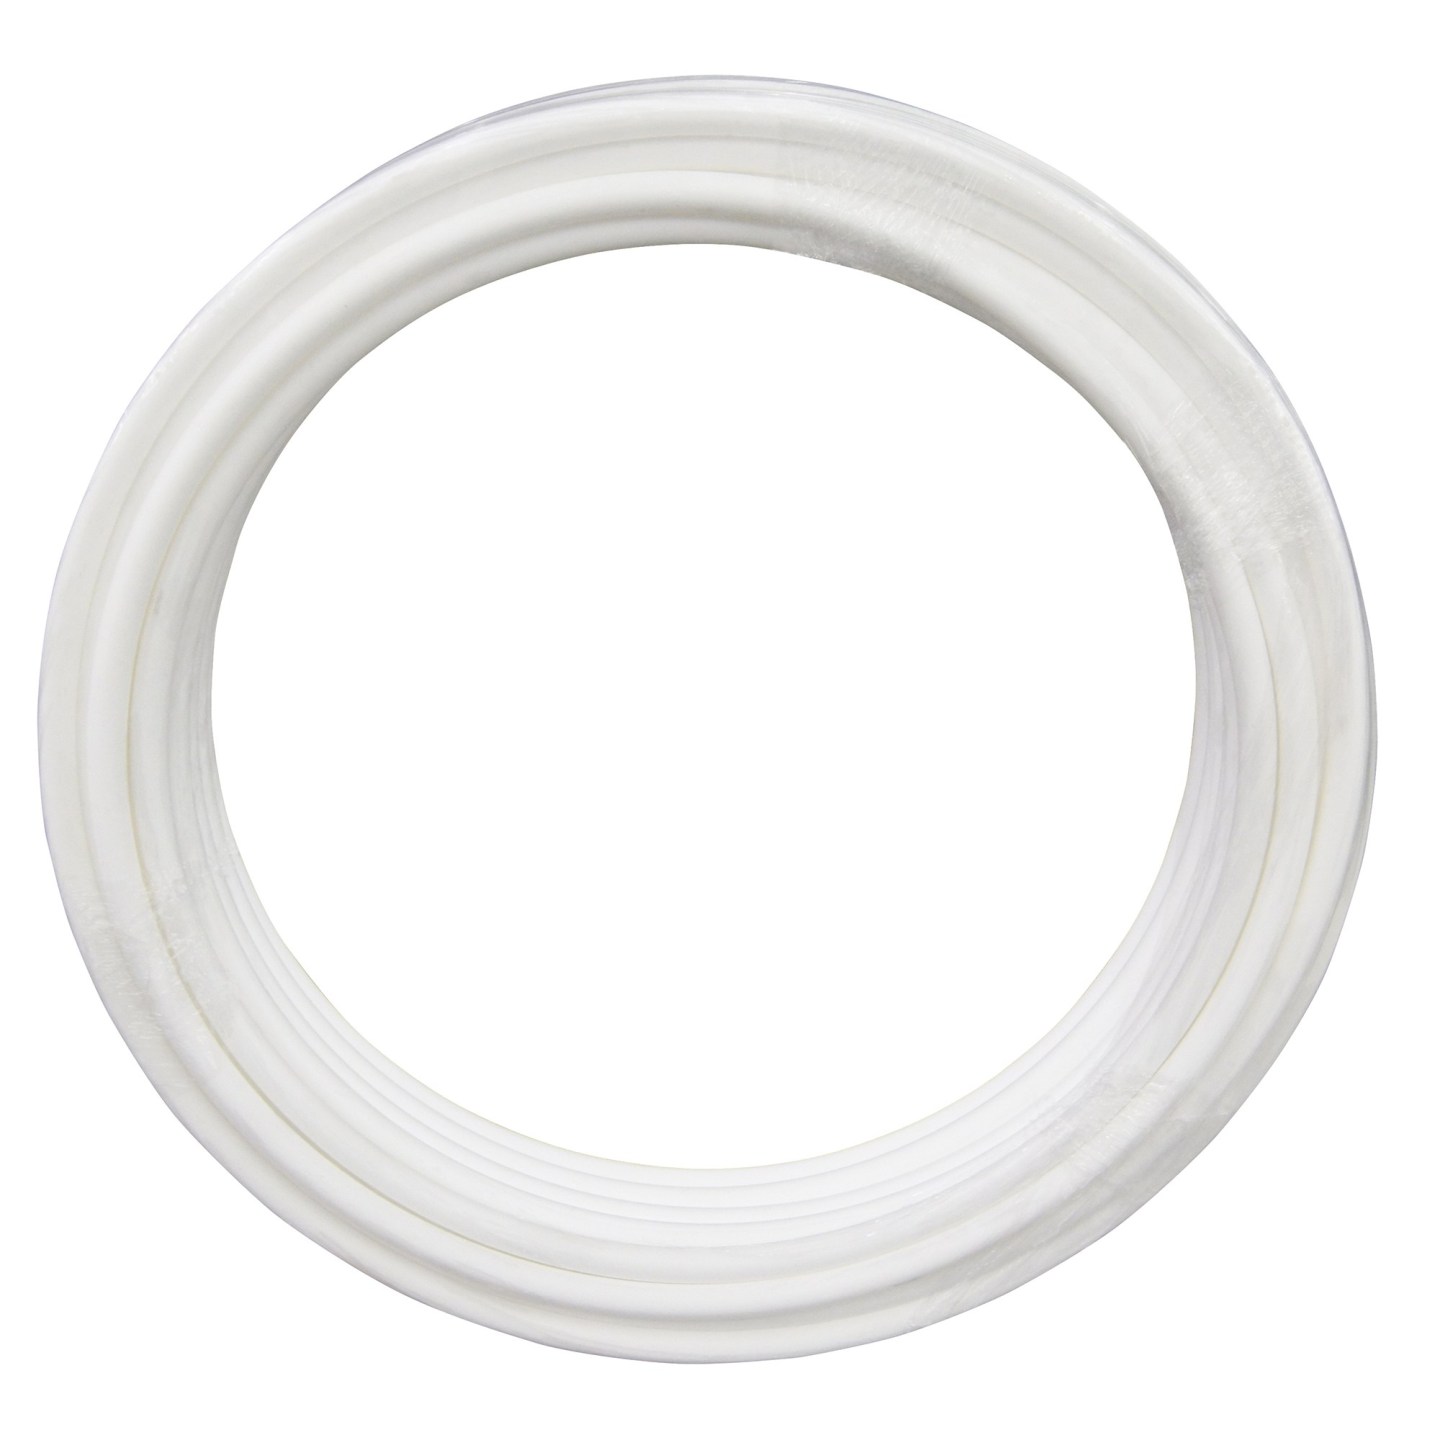 APPW2534 PEX-B Pipe Tubing, 3/4 in, Polyethylene, White, 25 ft L